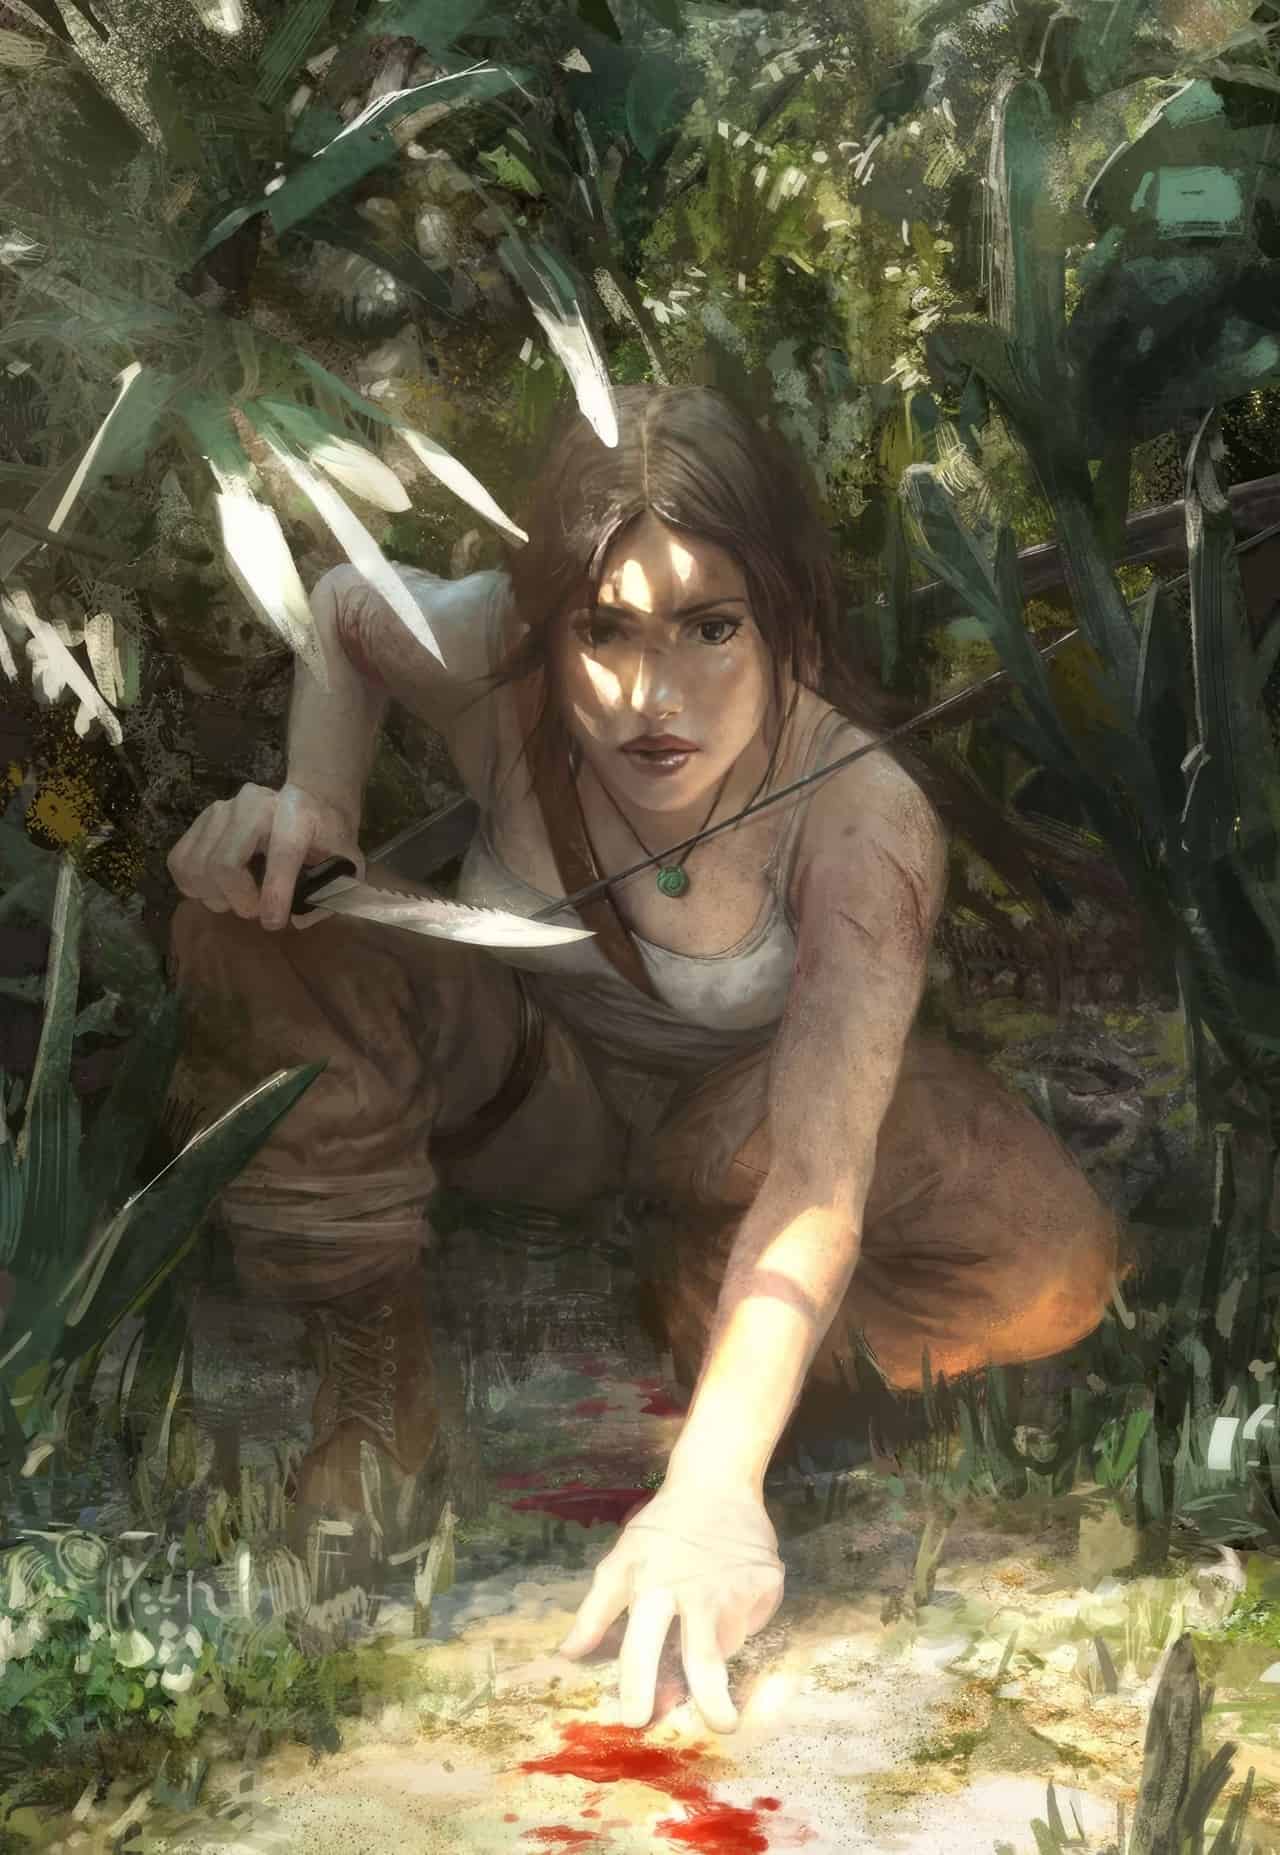 12 Stunning Lara Croft Fan Art Pieces That Capture Her Tomb Raiding ...